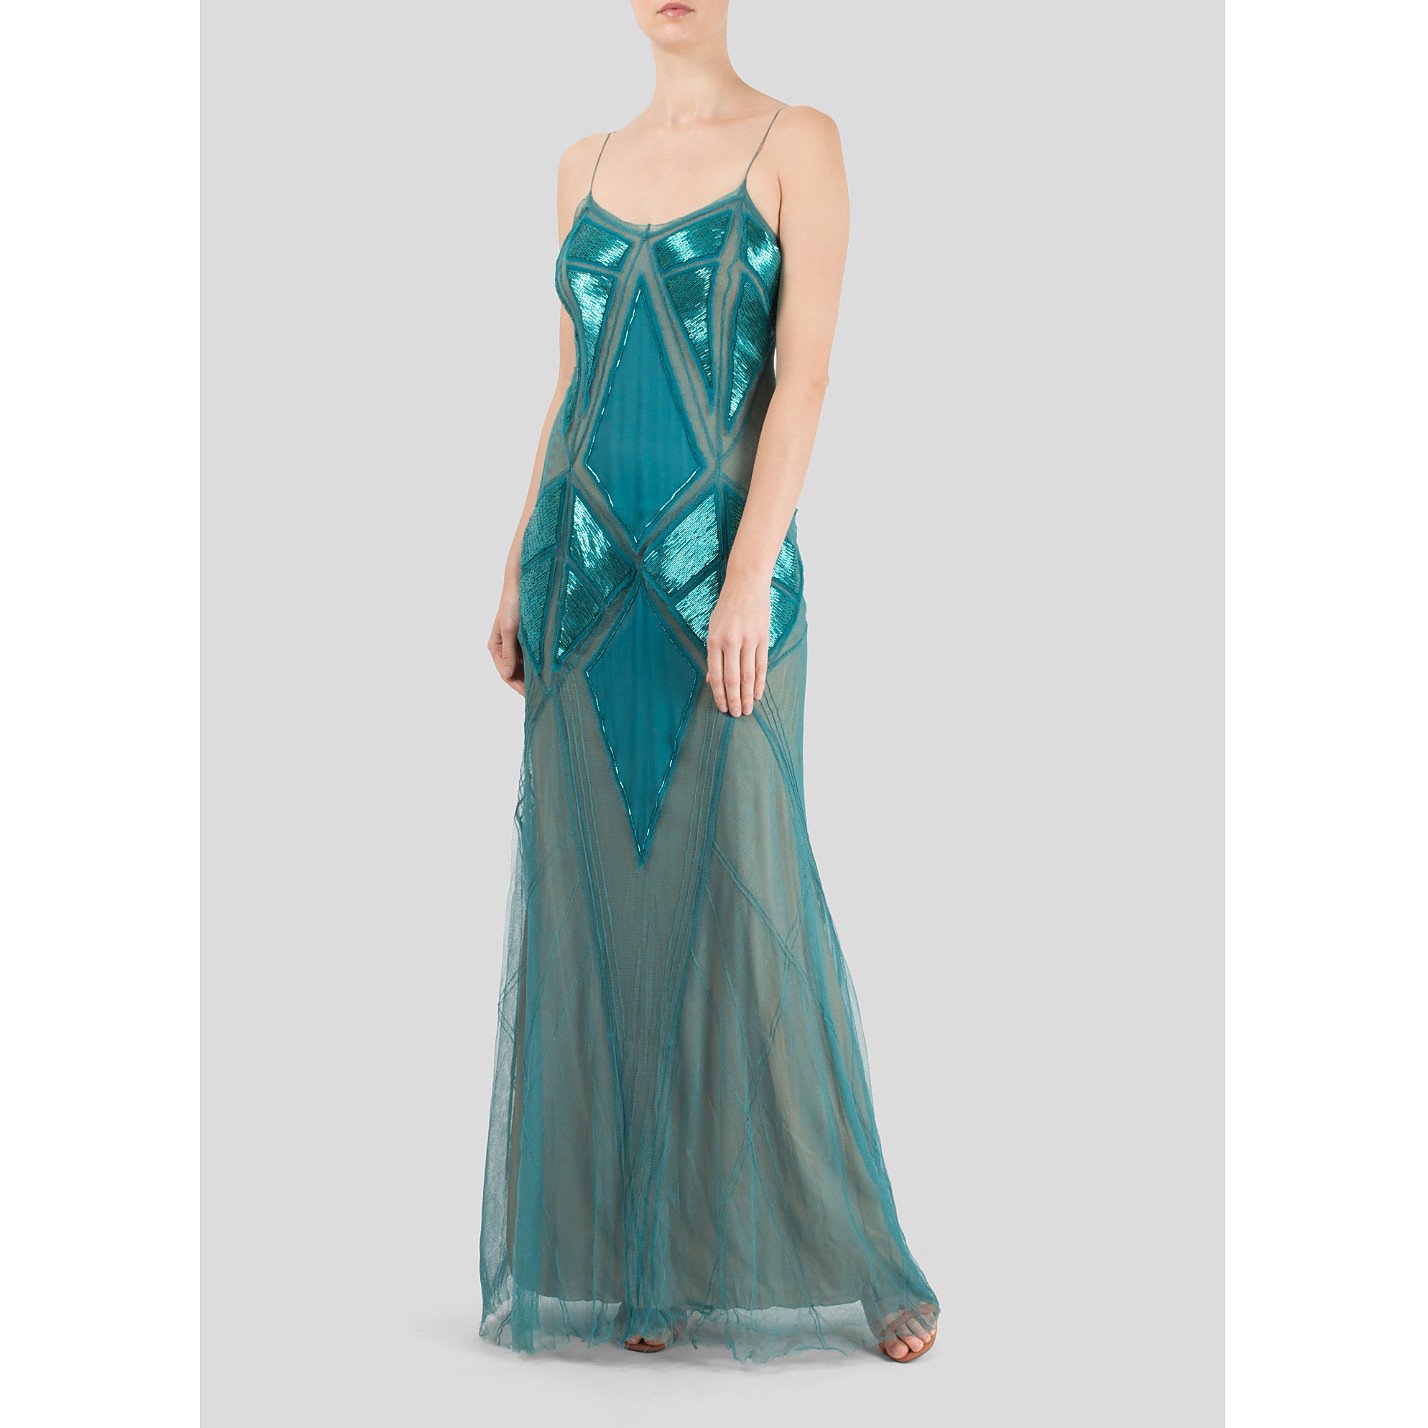 Alberta Ferretti Sequin Embellished Sleeveless Gown